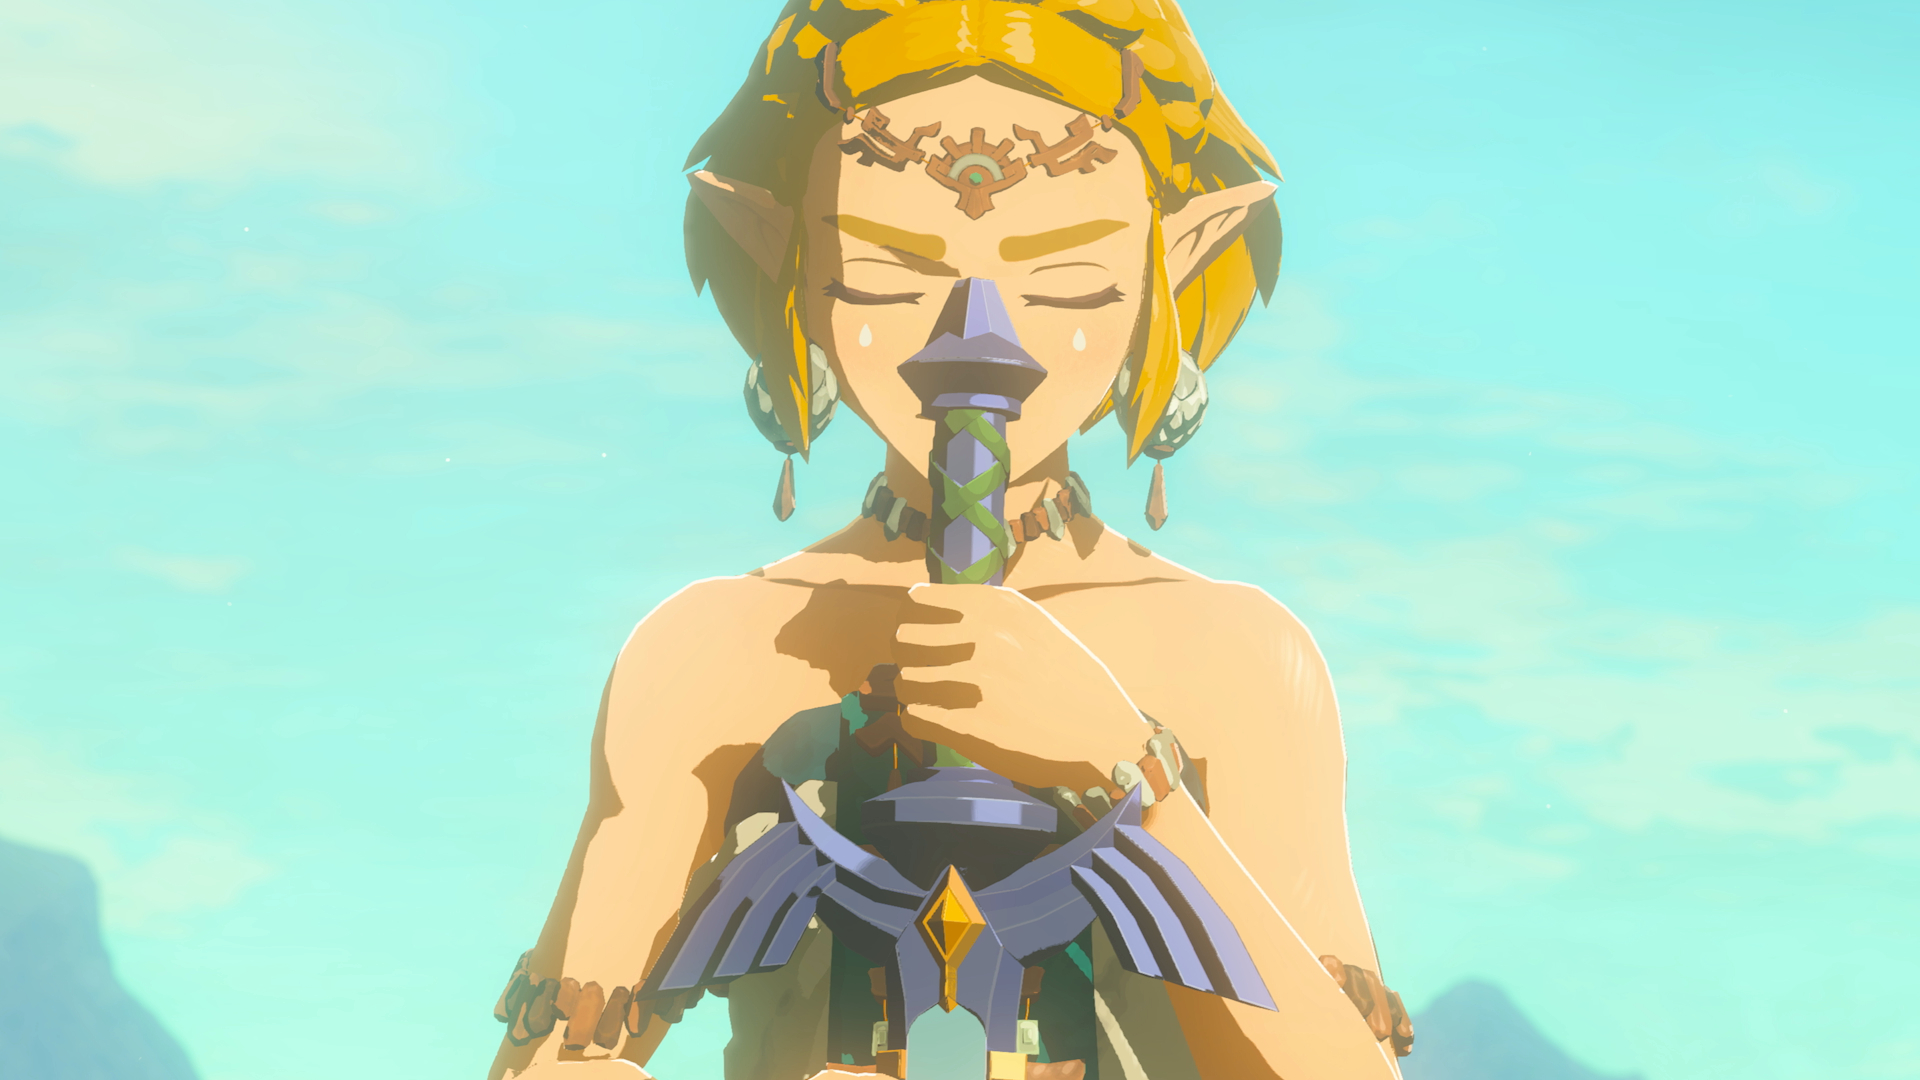 Miyamoto views himself as the 'guardian' of Zelda, aims to make